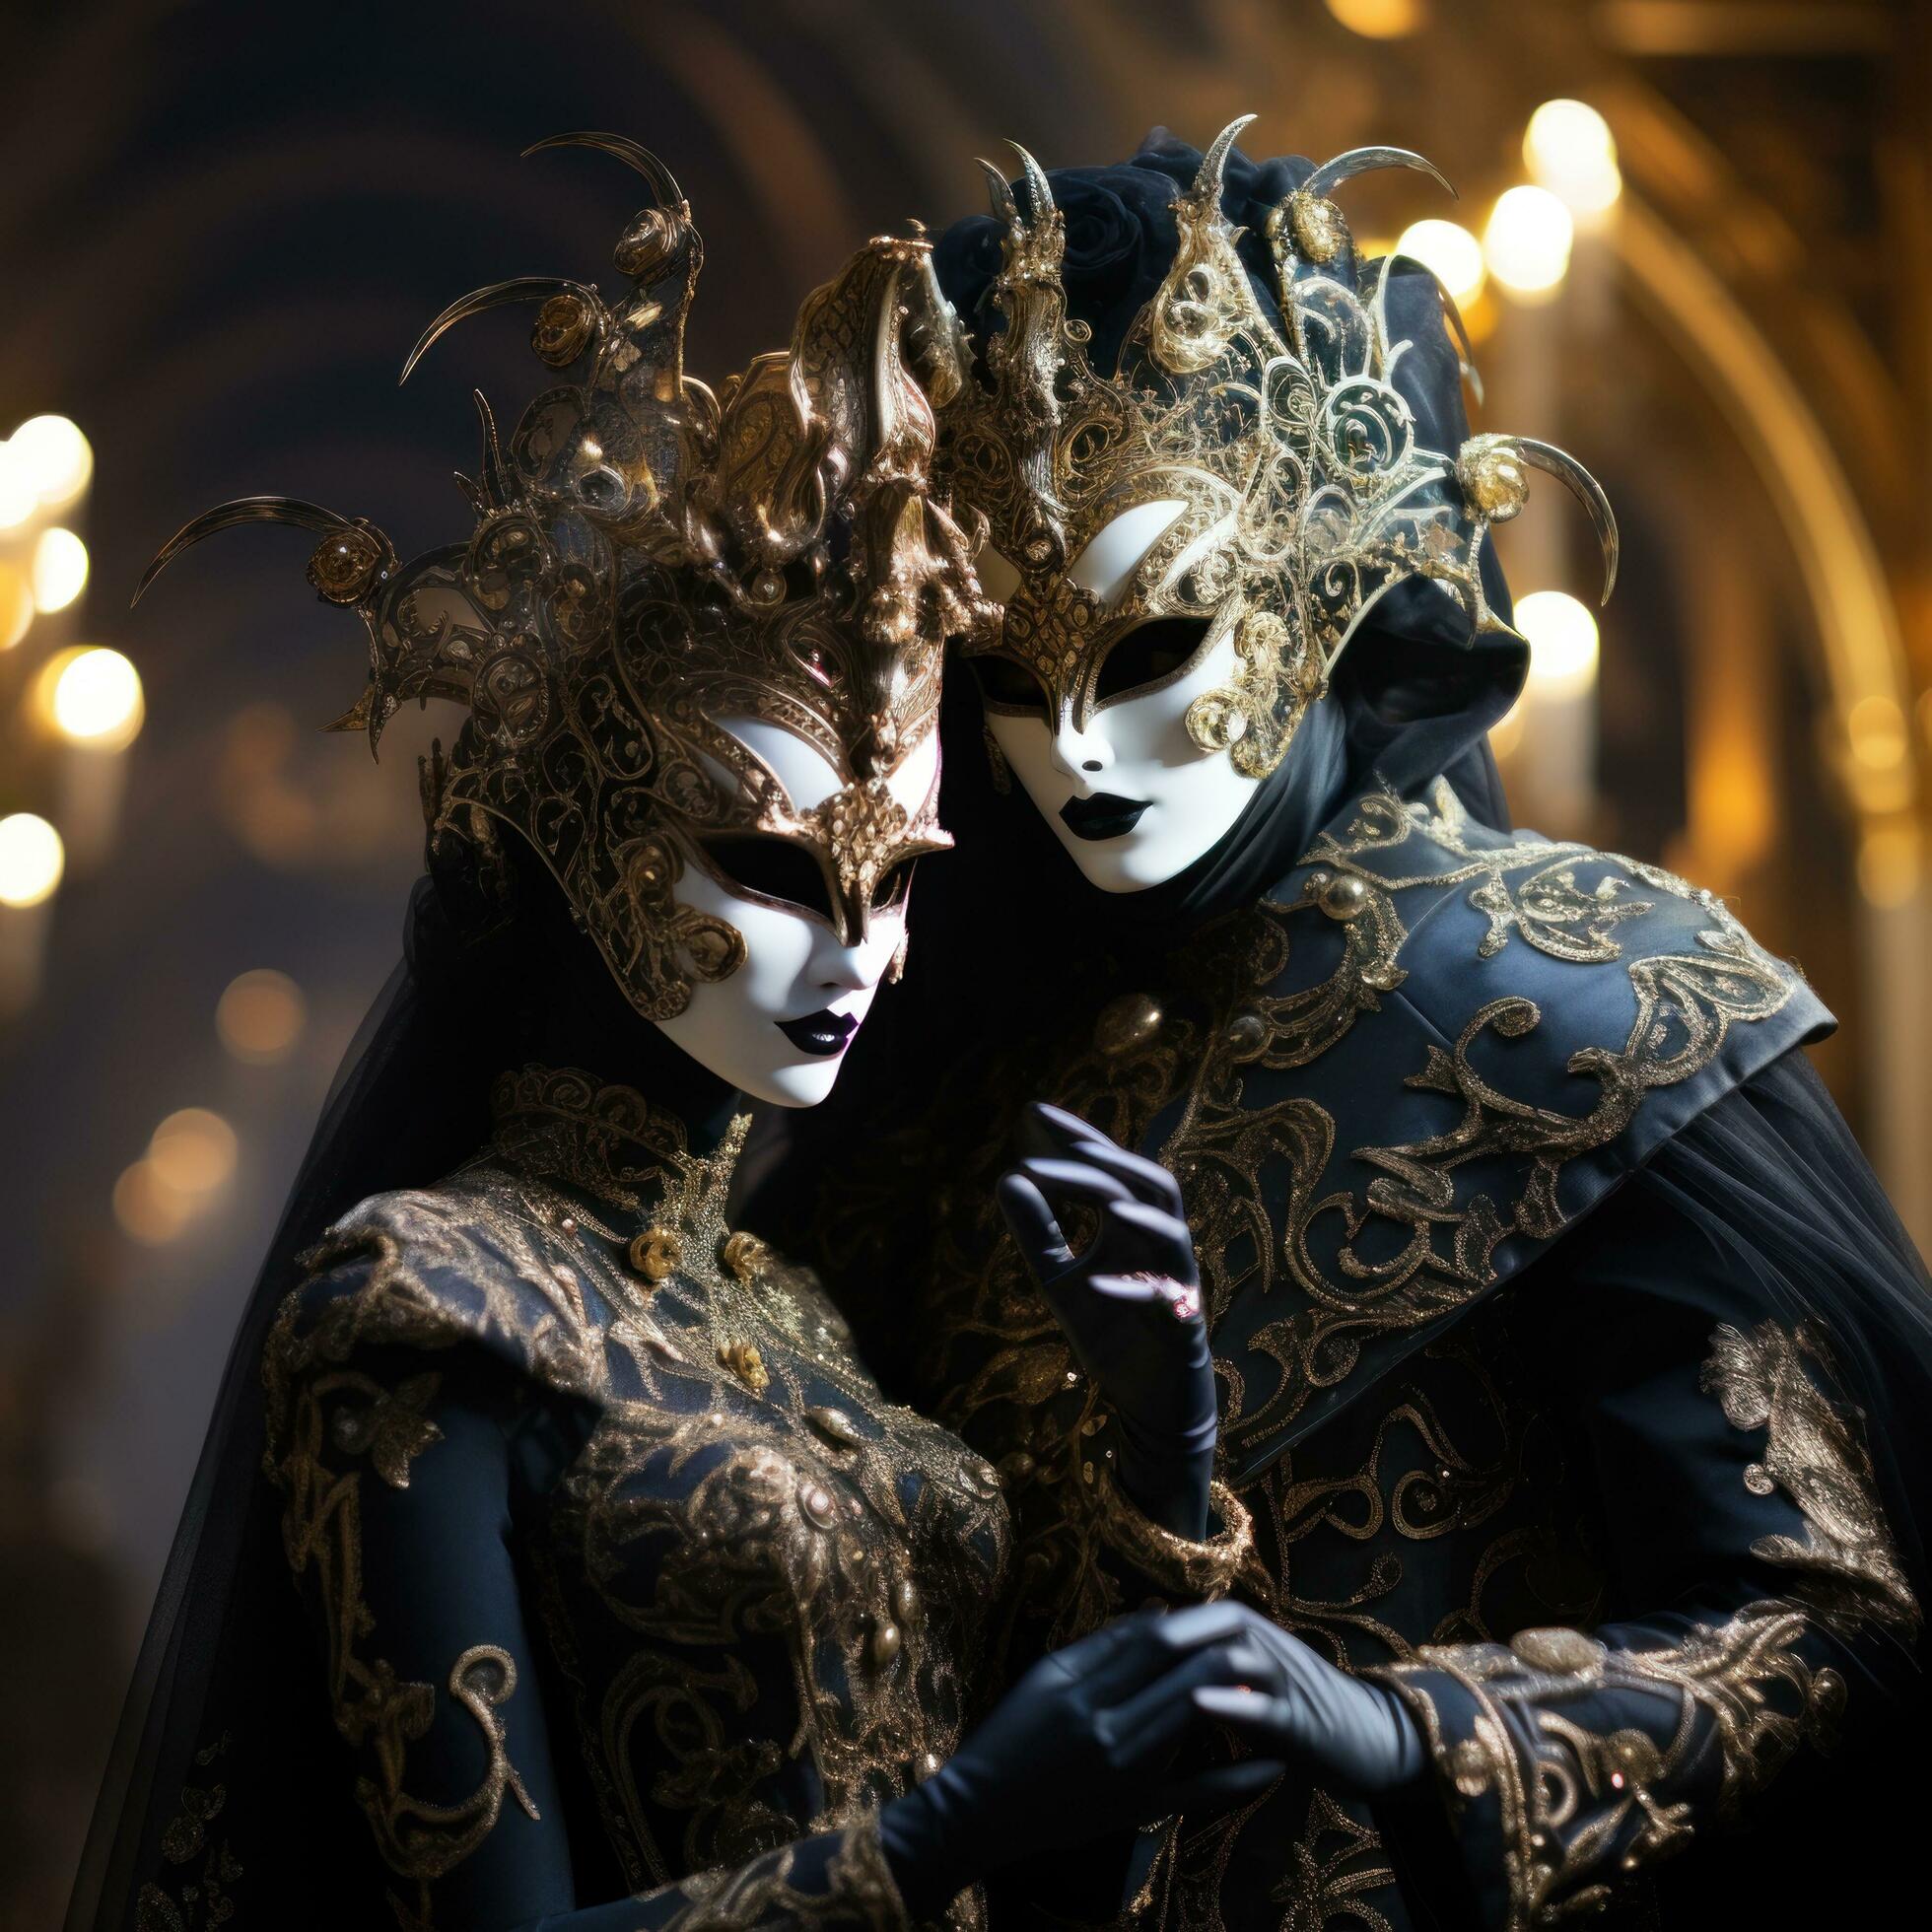 masquerade-ball-at-venice-carnival-with-ornate-masks-and-costumes-free-photo.jpg